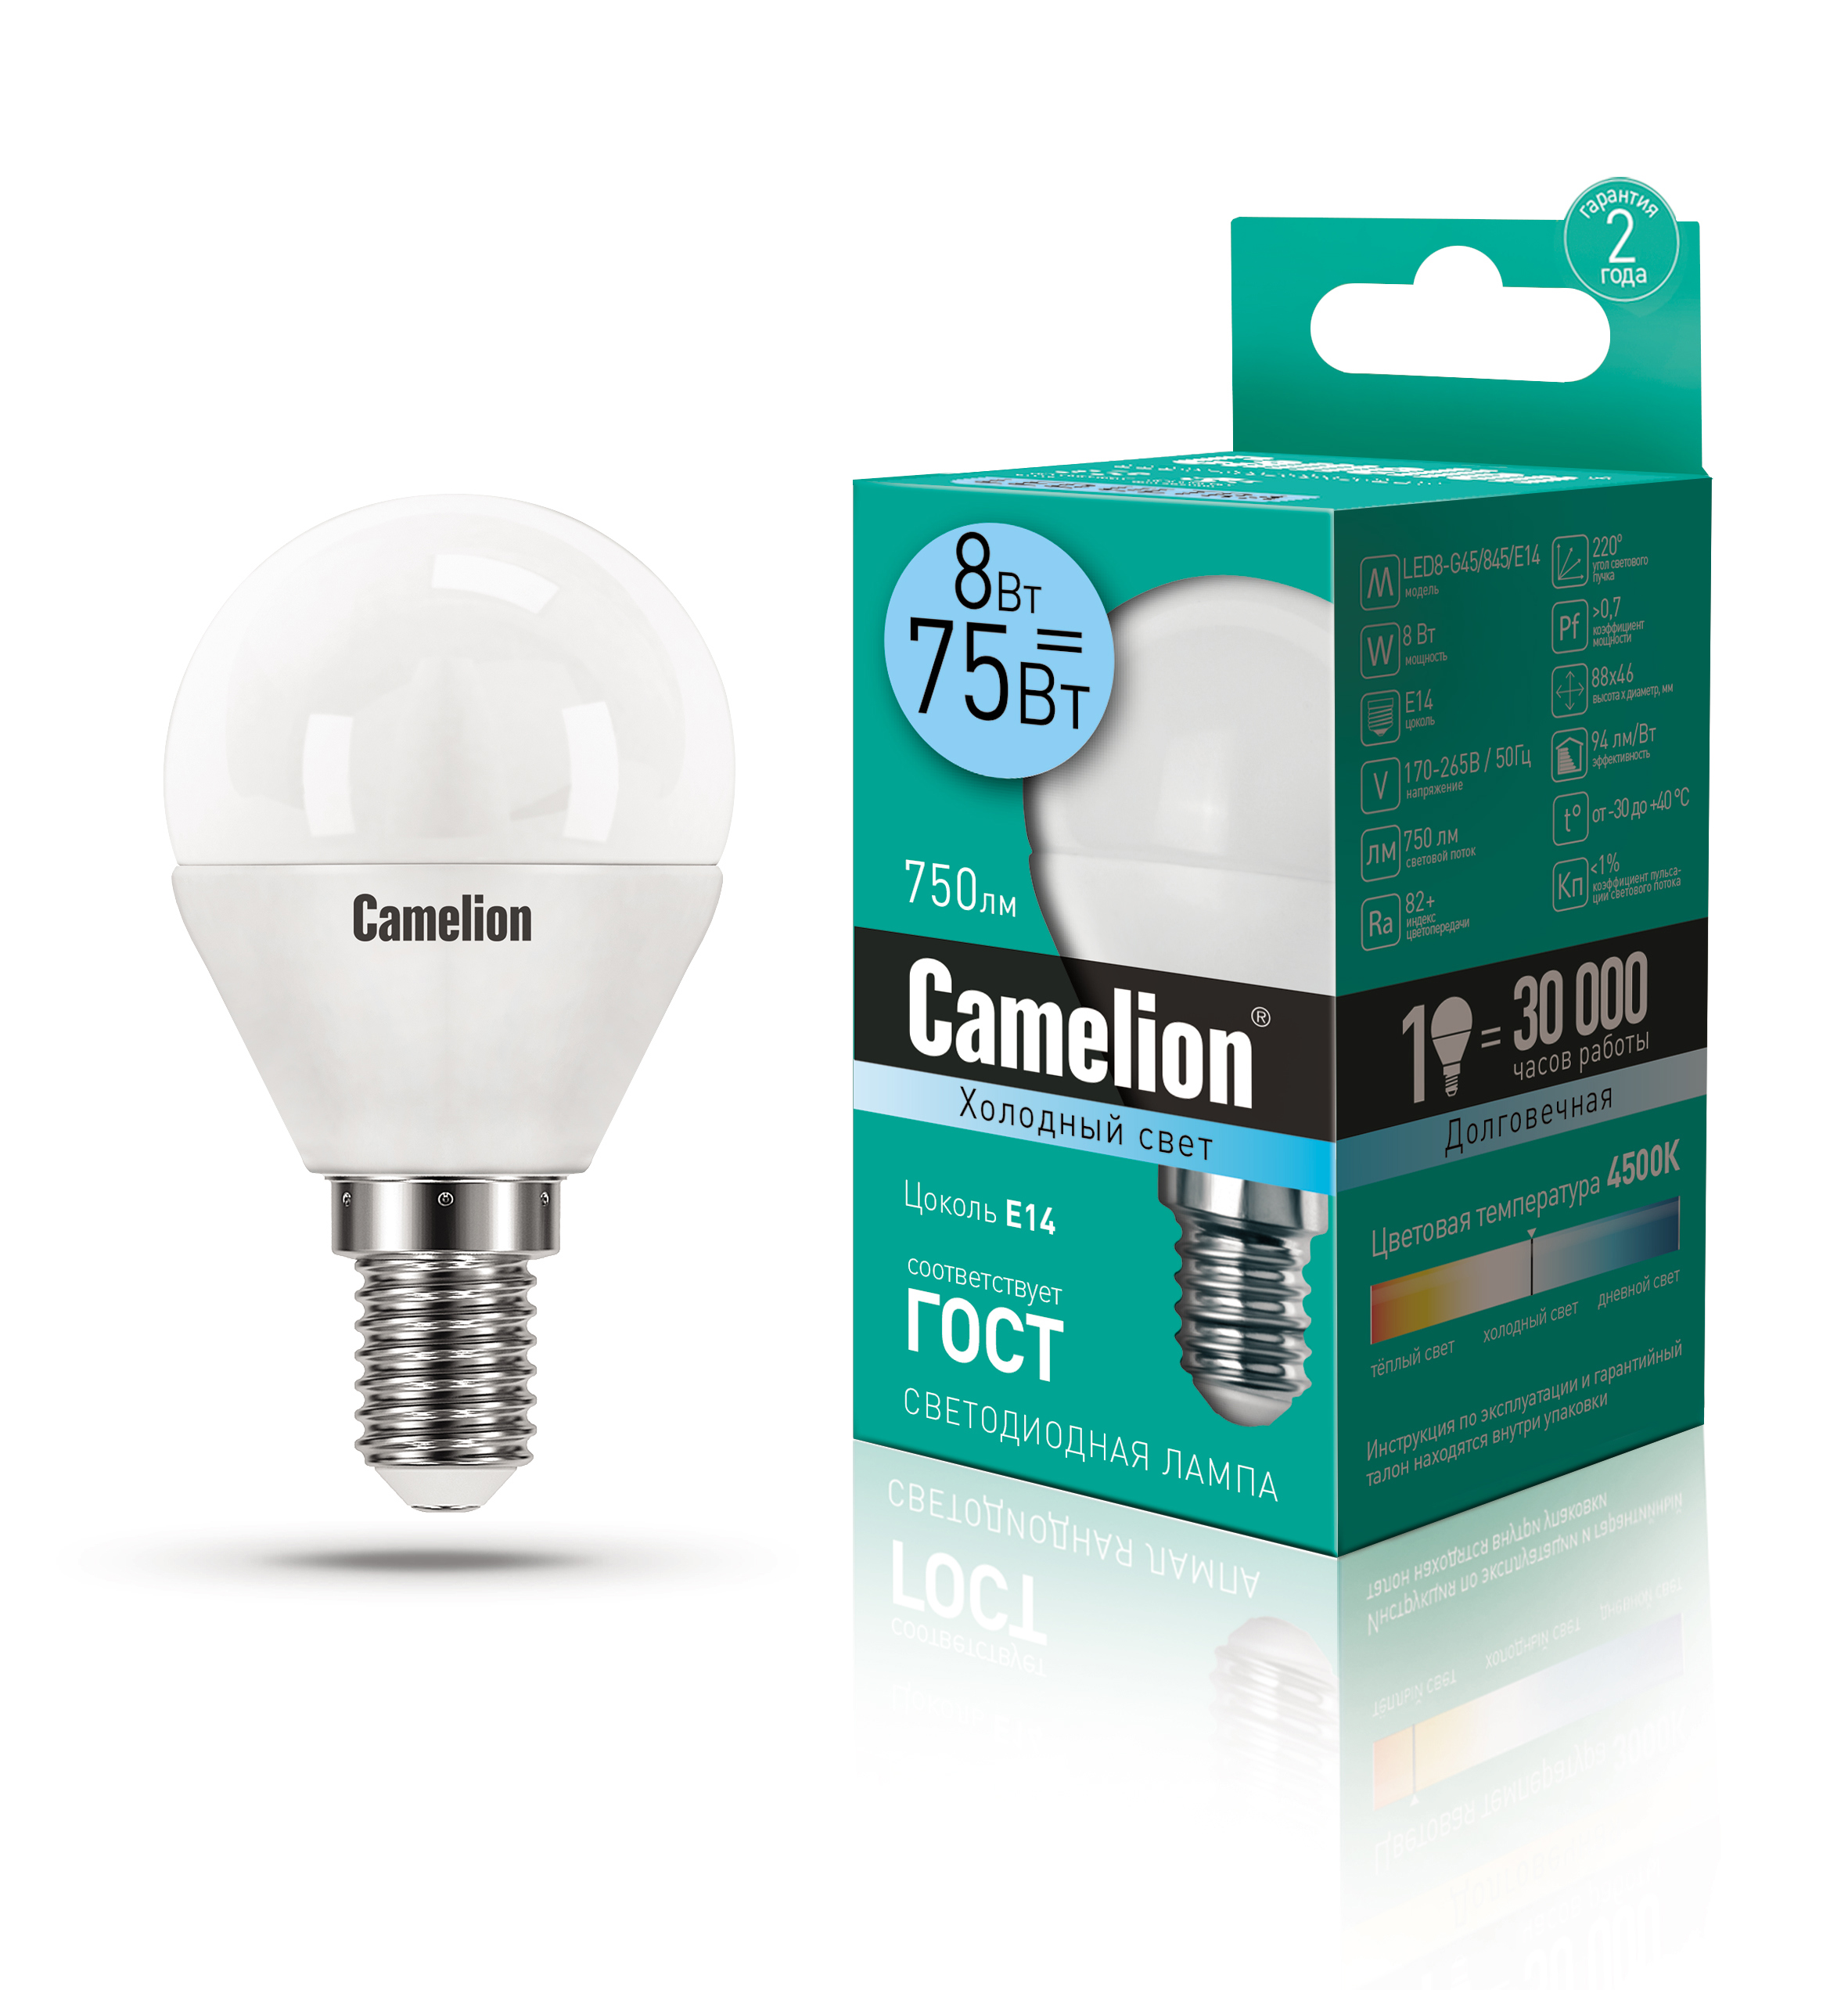  лампа Camelion LED8-G45/845/E14 12393 по цене 123 ₽/шт .